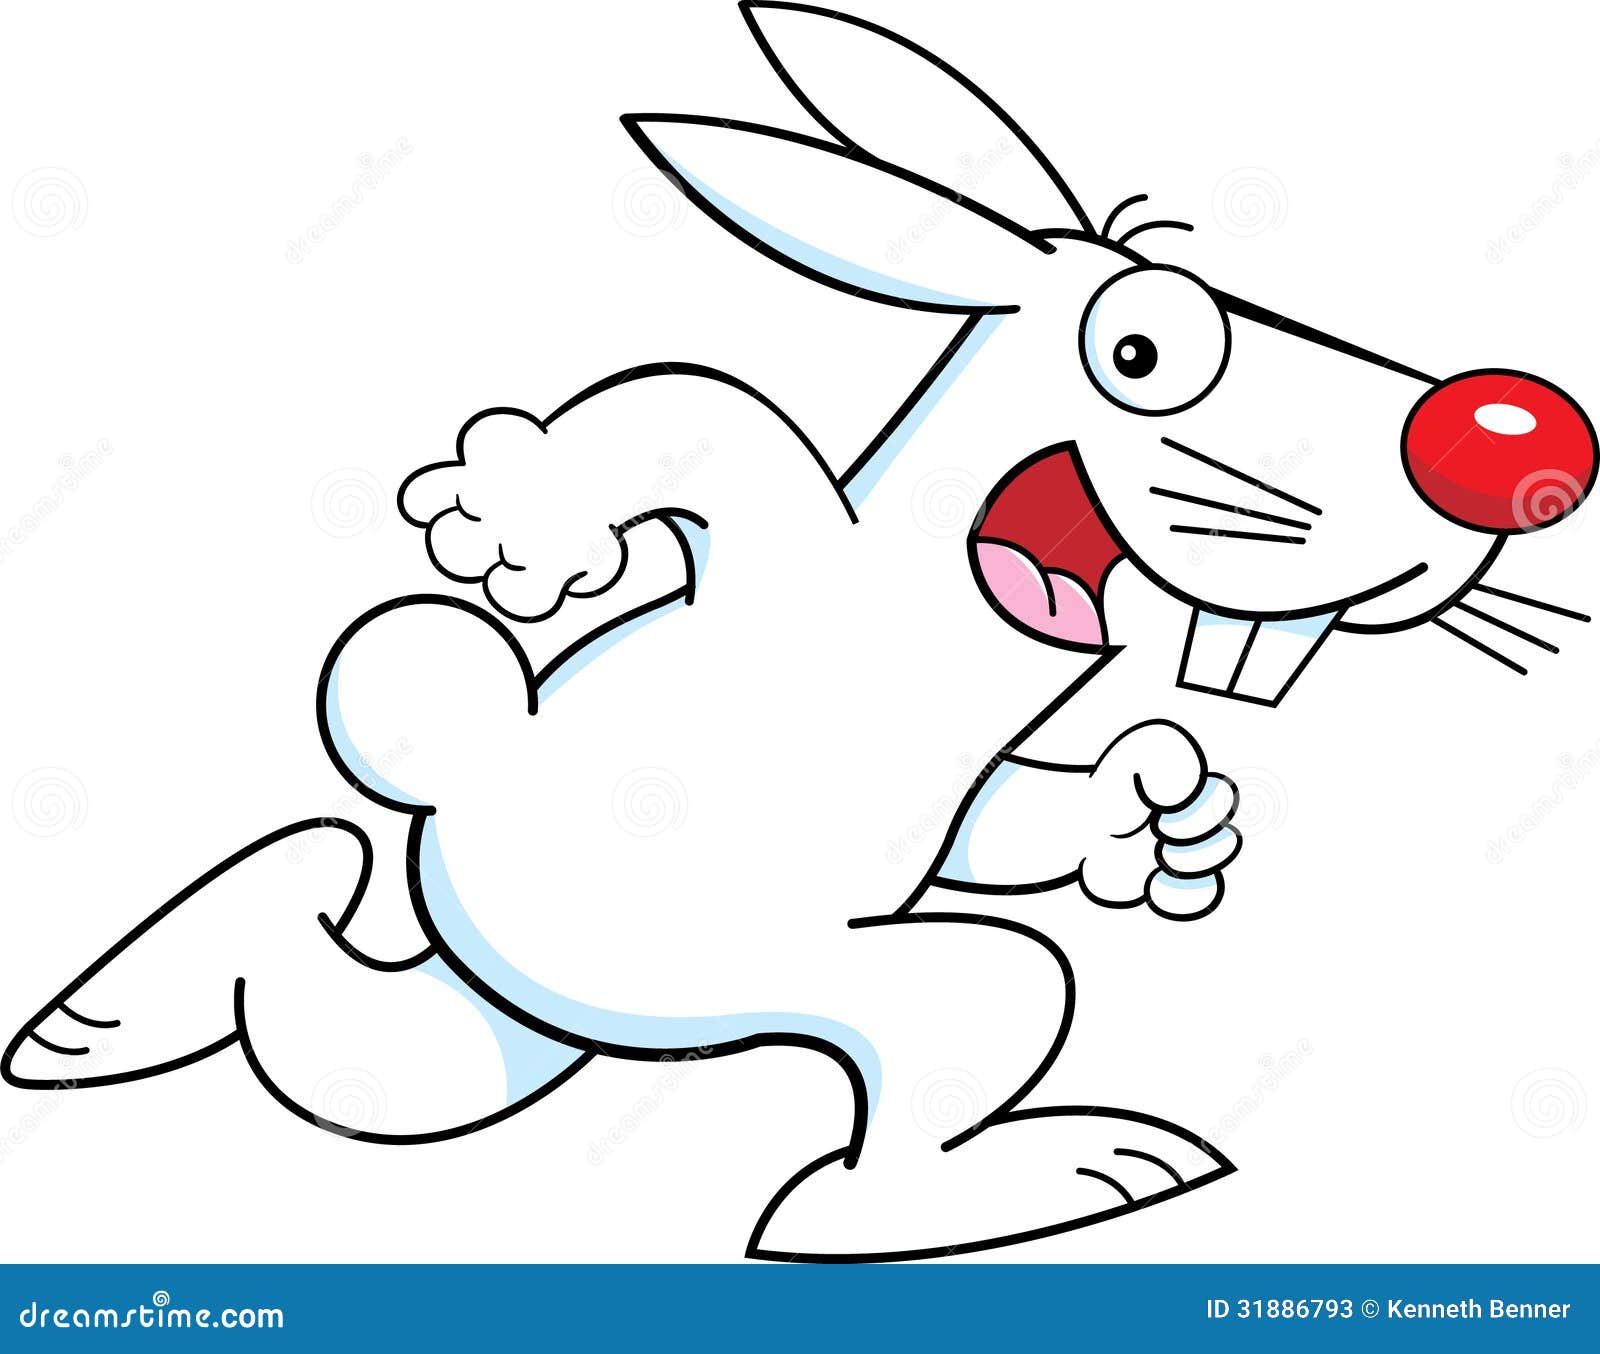 Cartoon running rabbit stock vector. Illustration of animal - 31886793